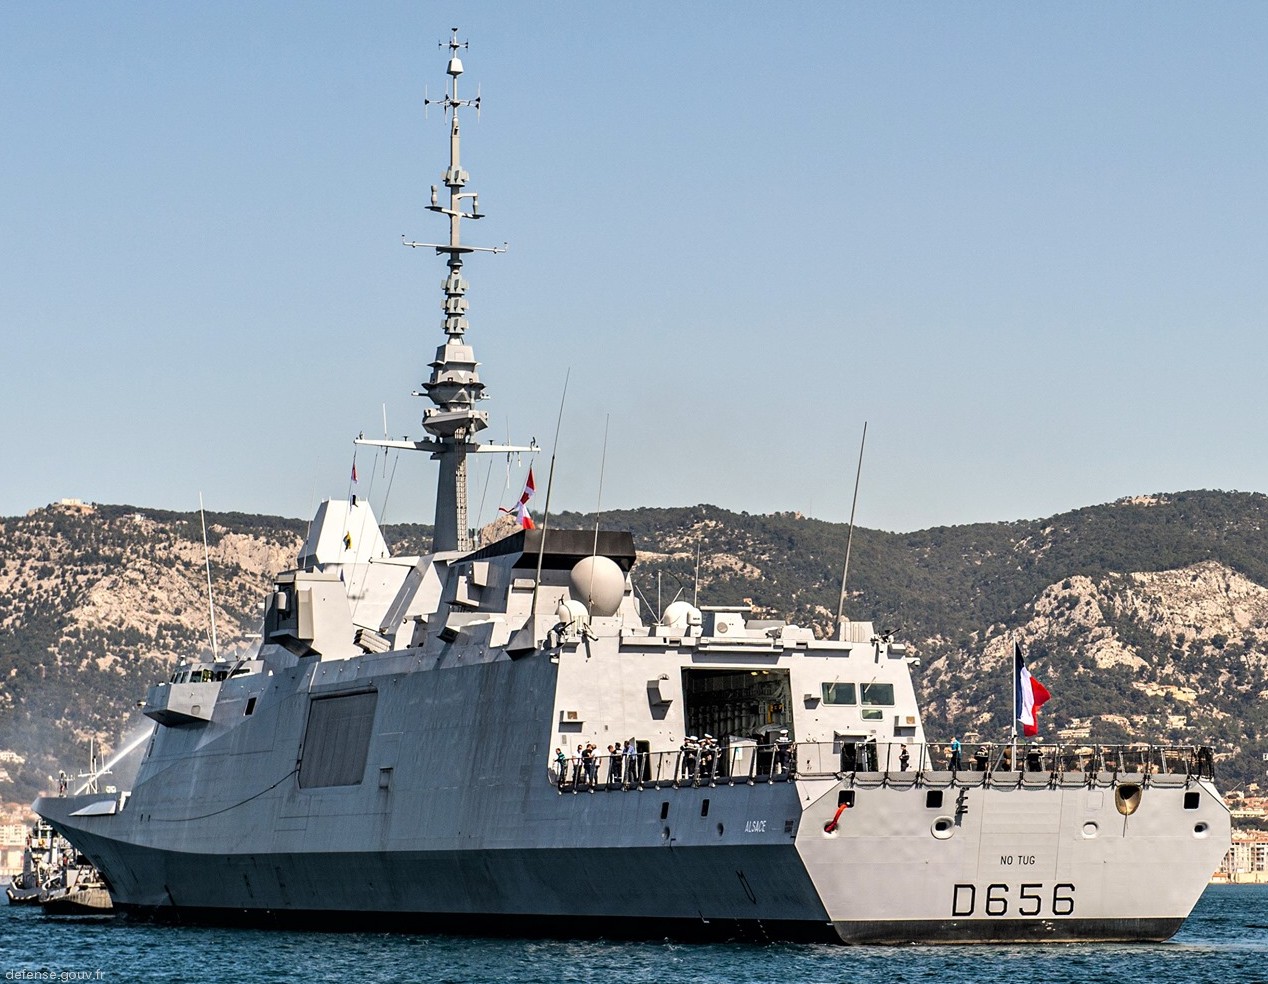 d-656 fs alsace fremm aquitaine class frigate fregate multi purpose french navy marine nationale 11